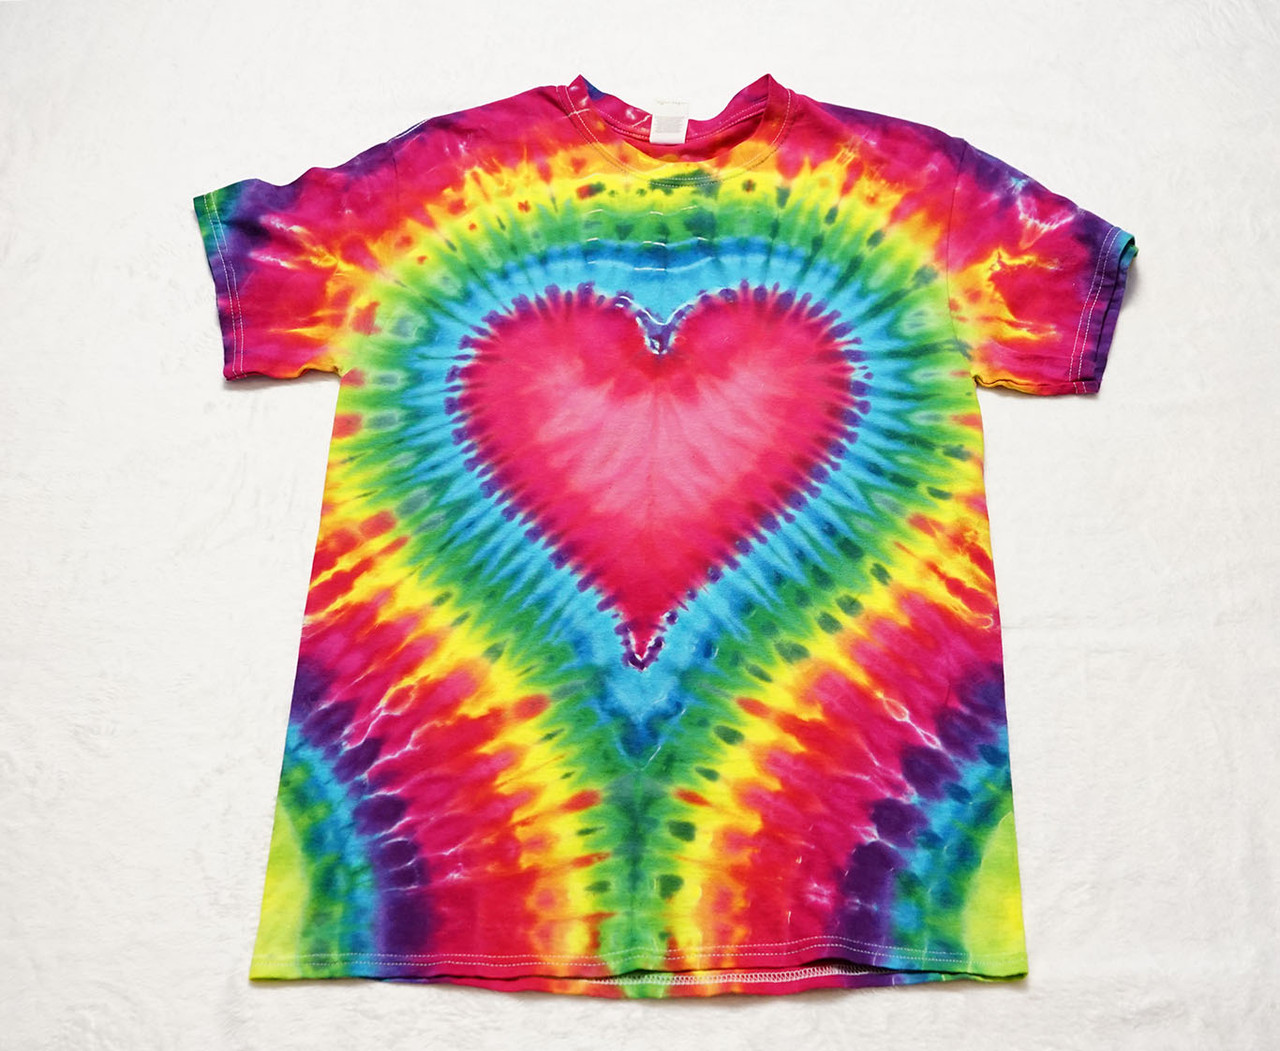 Rainbow Tie-Dye T-shirts – The Reptarium